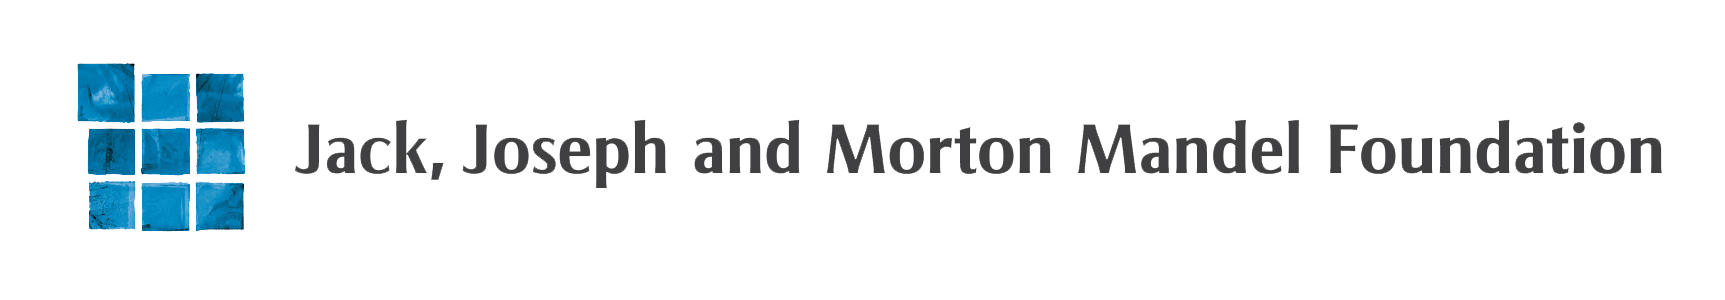 Jack,Joseph and Morton Mandel Foundation